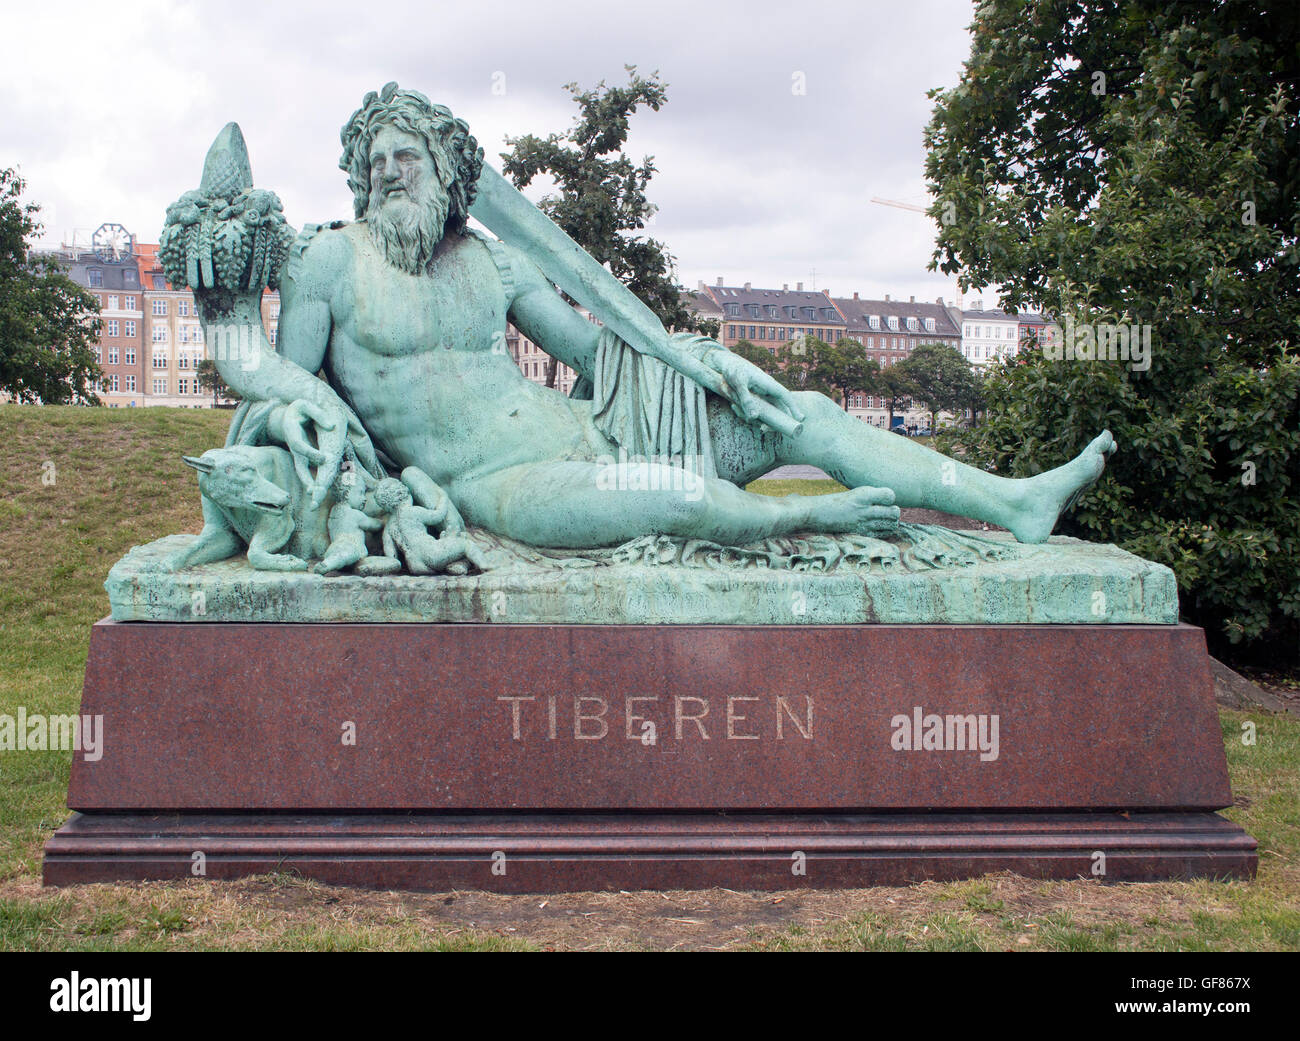 Tiberen Roman statue in Copenhagen Denmark Stock Photo